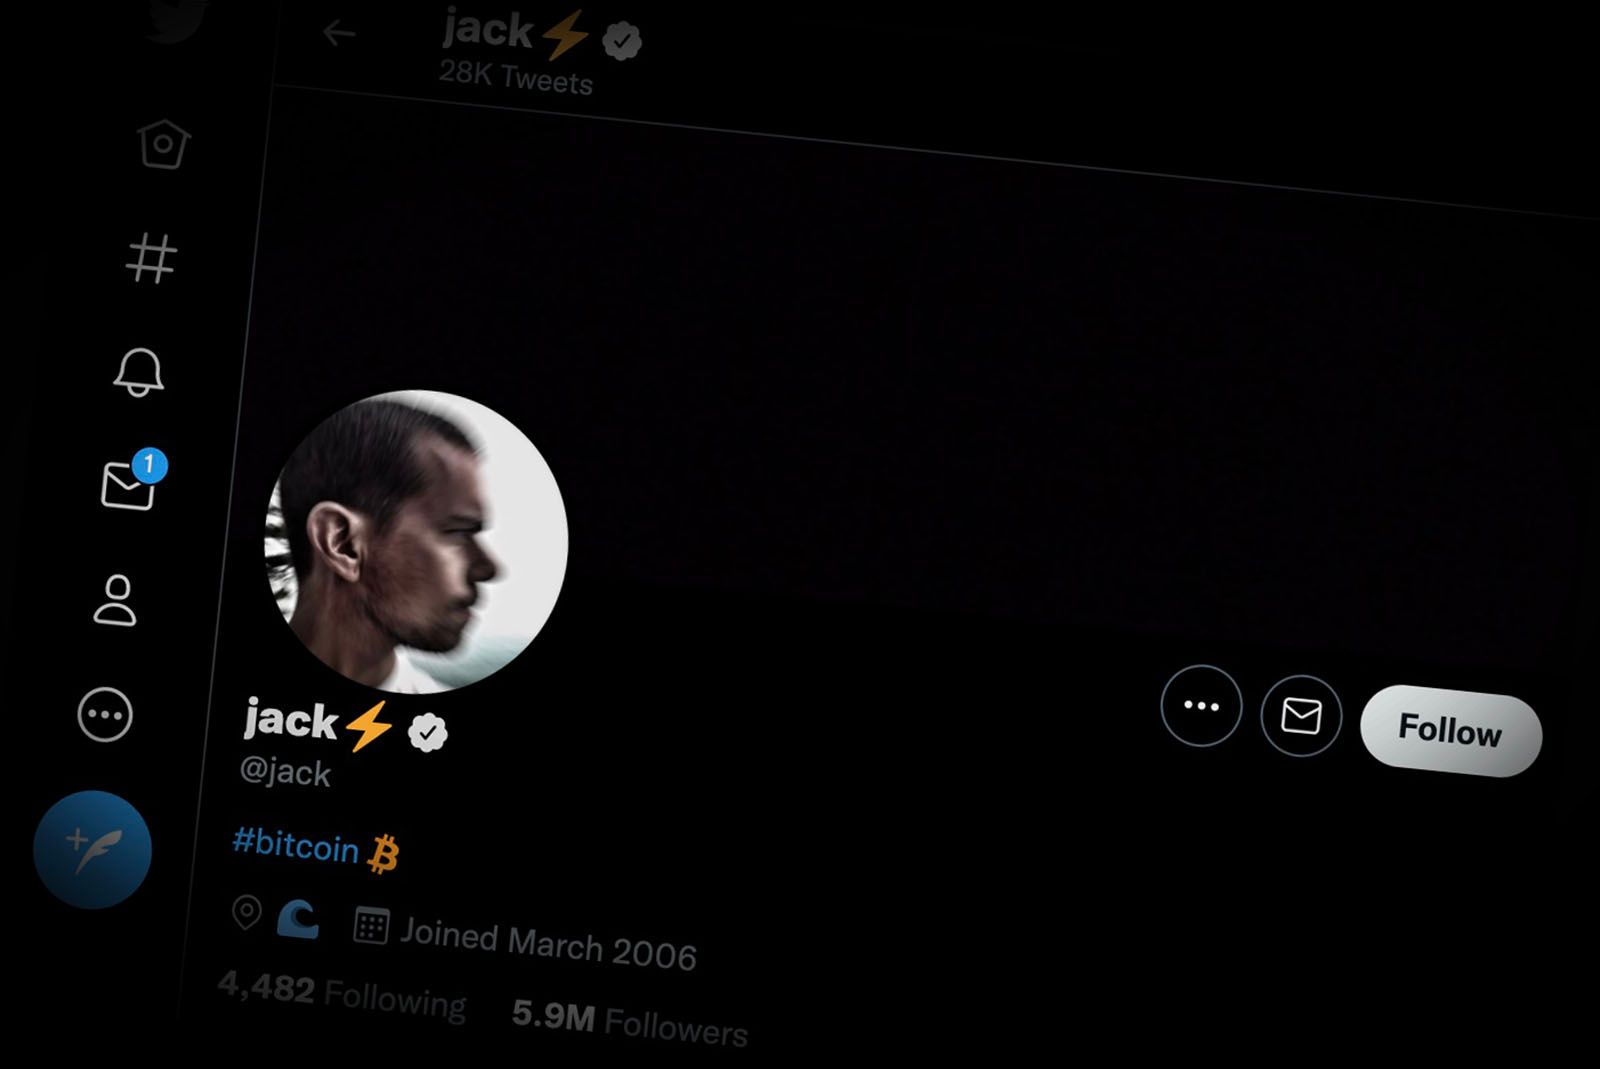 Jack Dorsey's Twitter profile screenshot